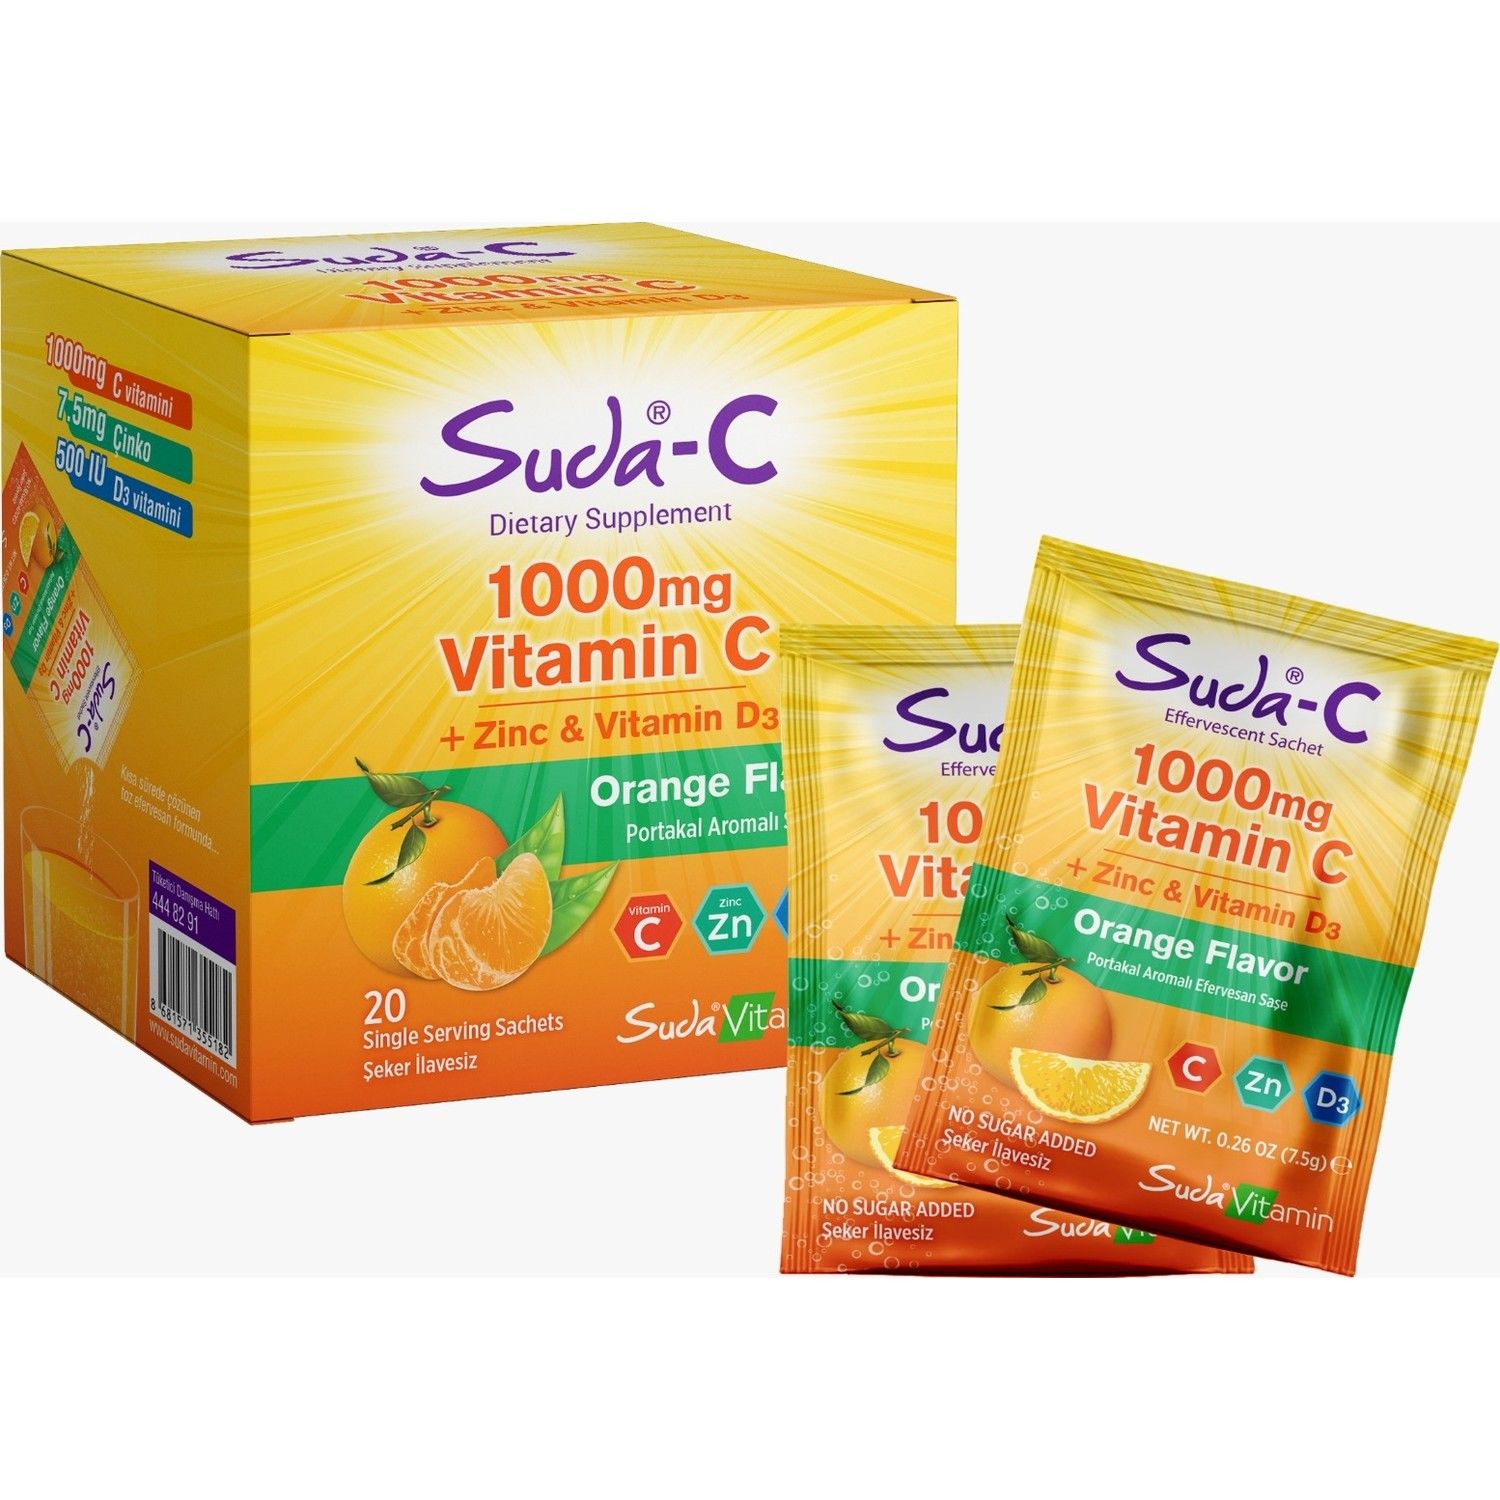 Suda-C Vitamin C 1000 mg + Zinc D3 Portakal Aromalı 20 Saşe